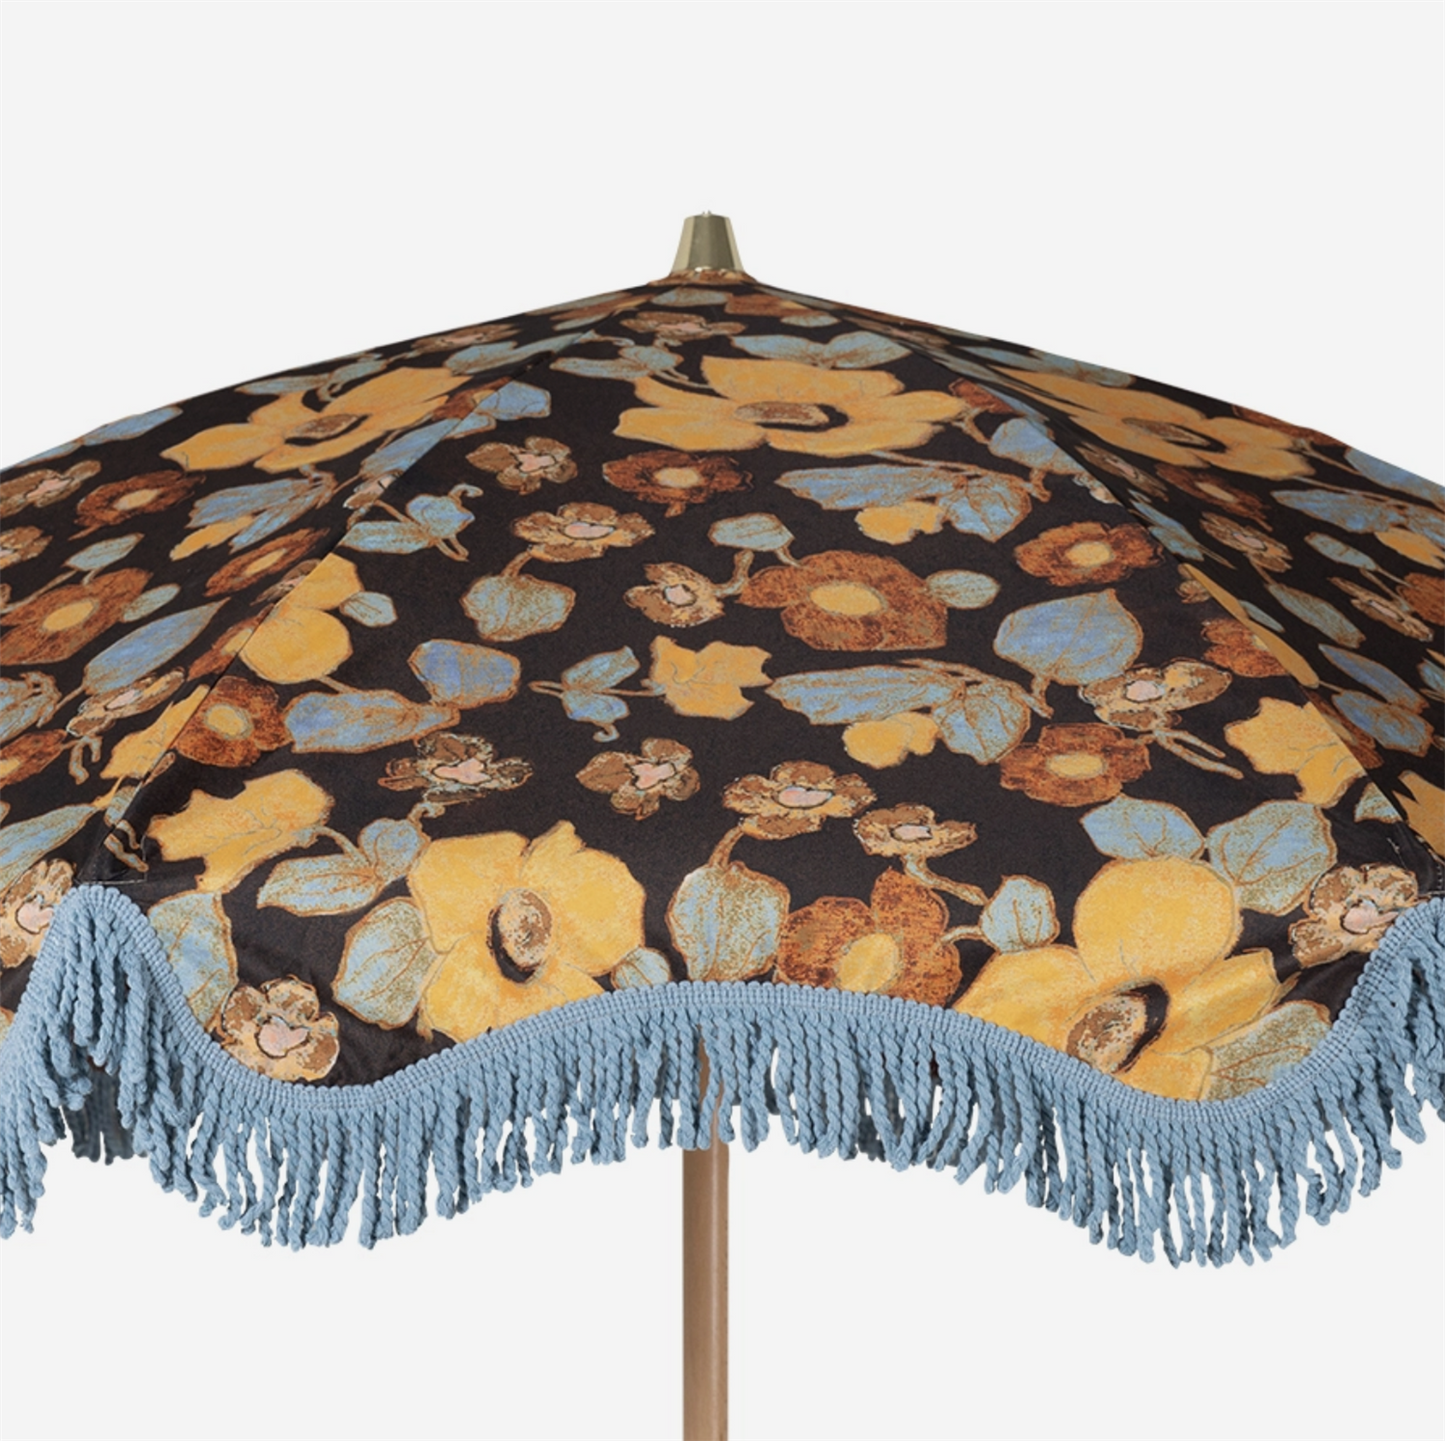 Beach Umbrella `Floral Energy´